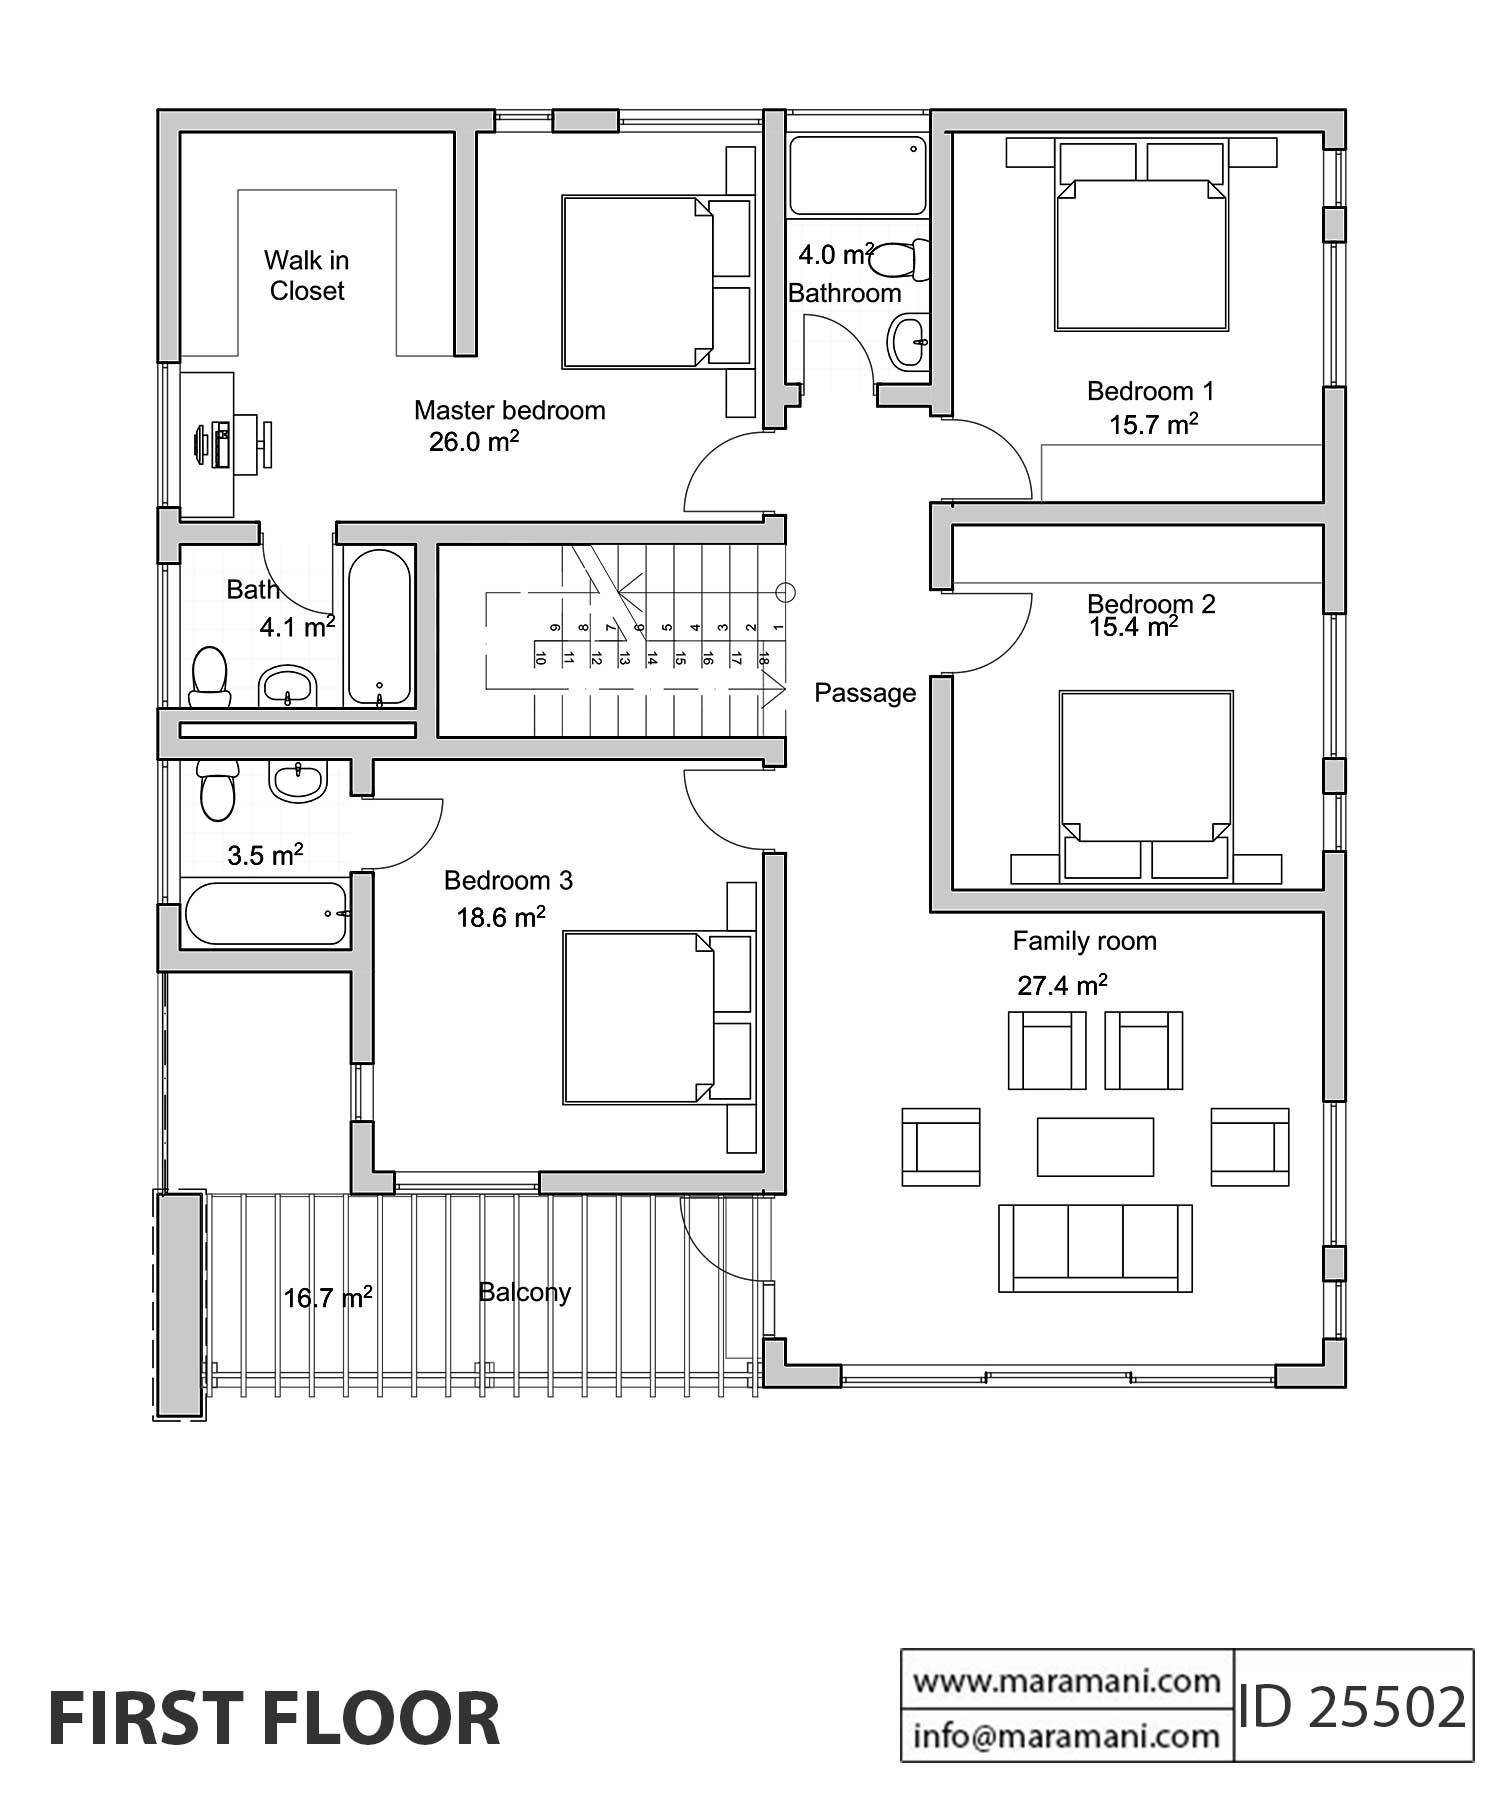 5 Bedroom House Plan - ID 25502